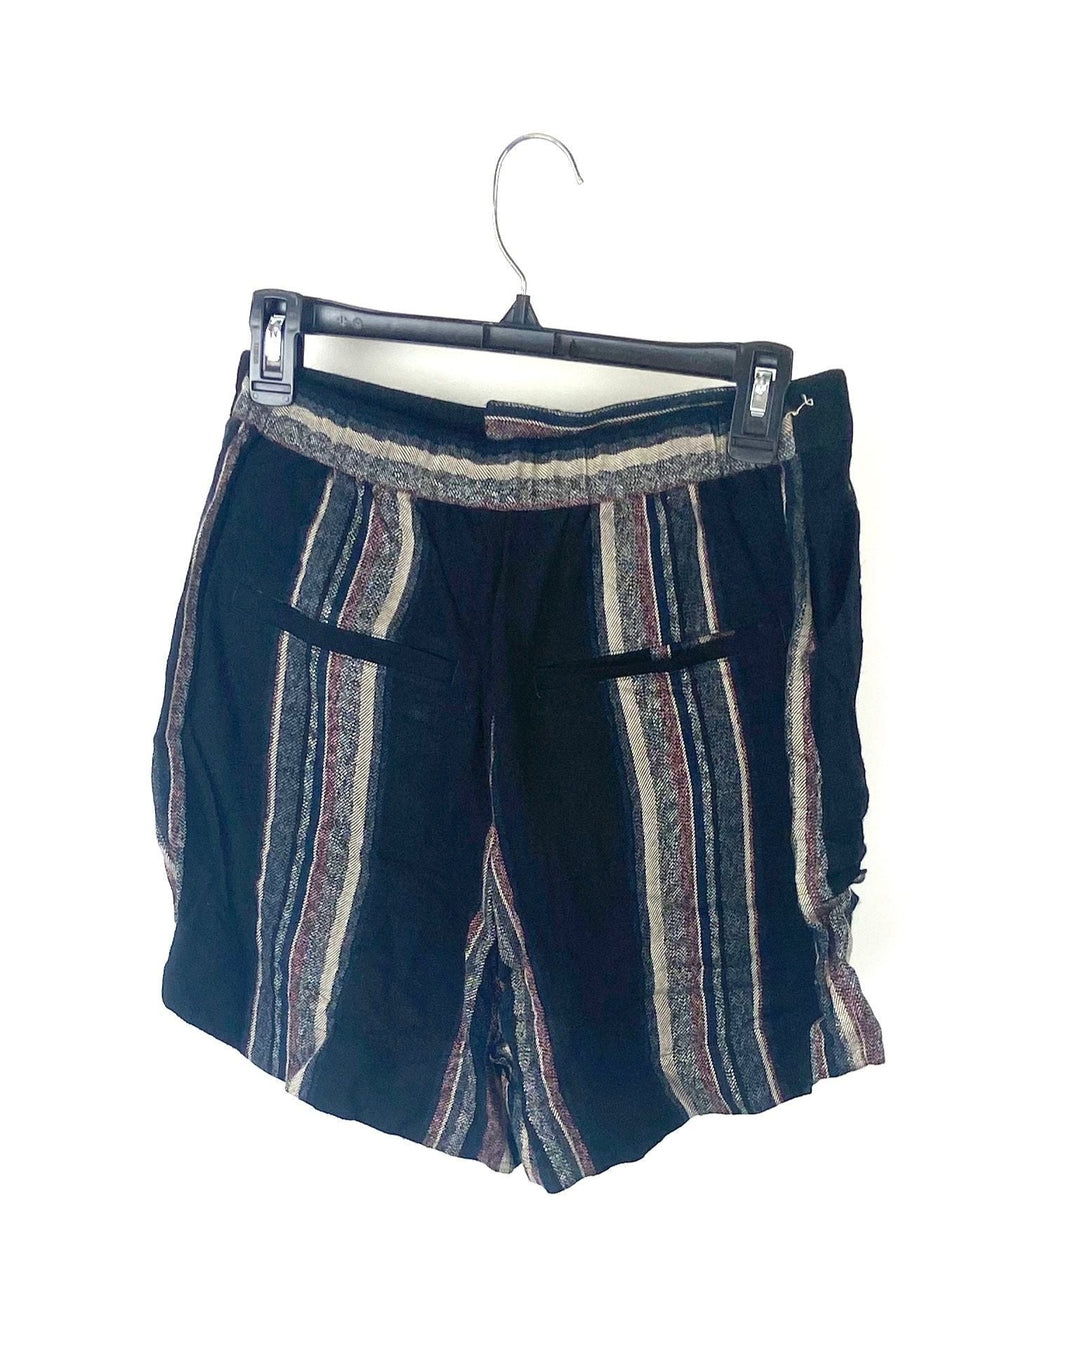 Black Striped Shorts - Medium